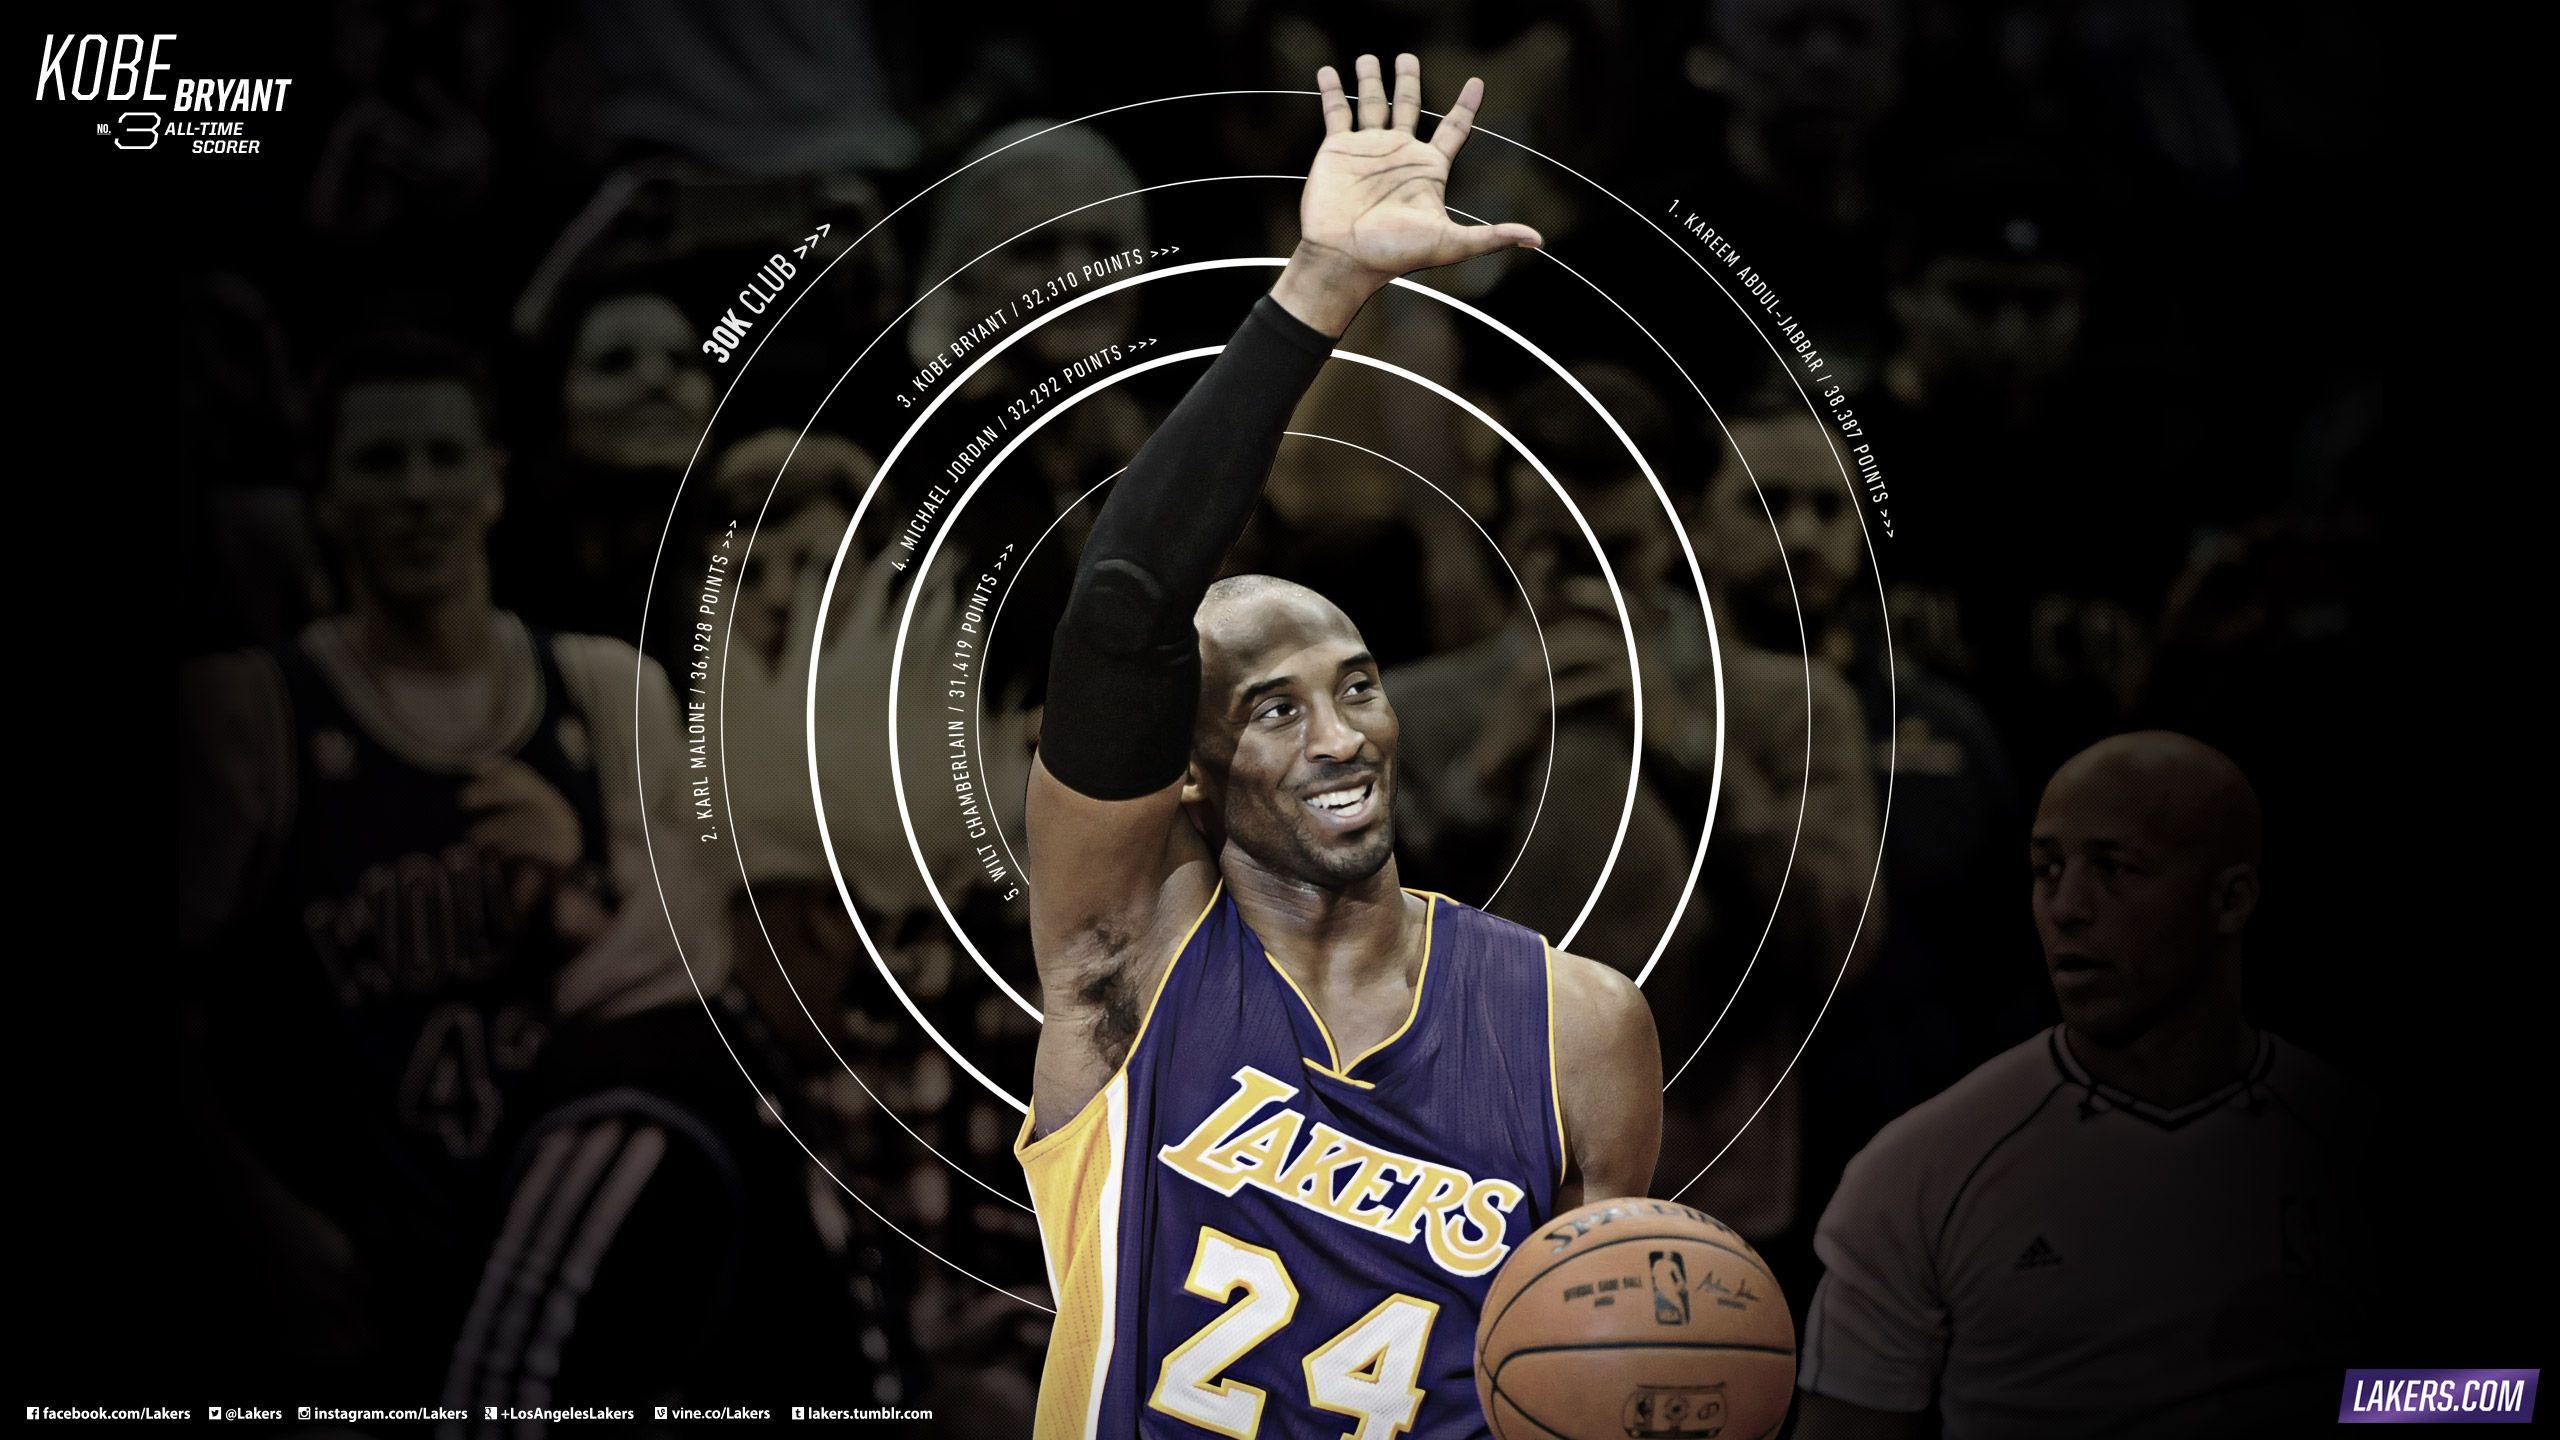 Lakers Wallpaper and Infographics. Kobe bryant wallpaper, Kobe bryant, Kobe